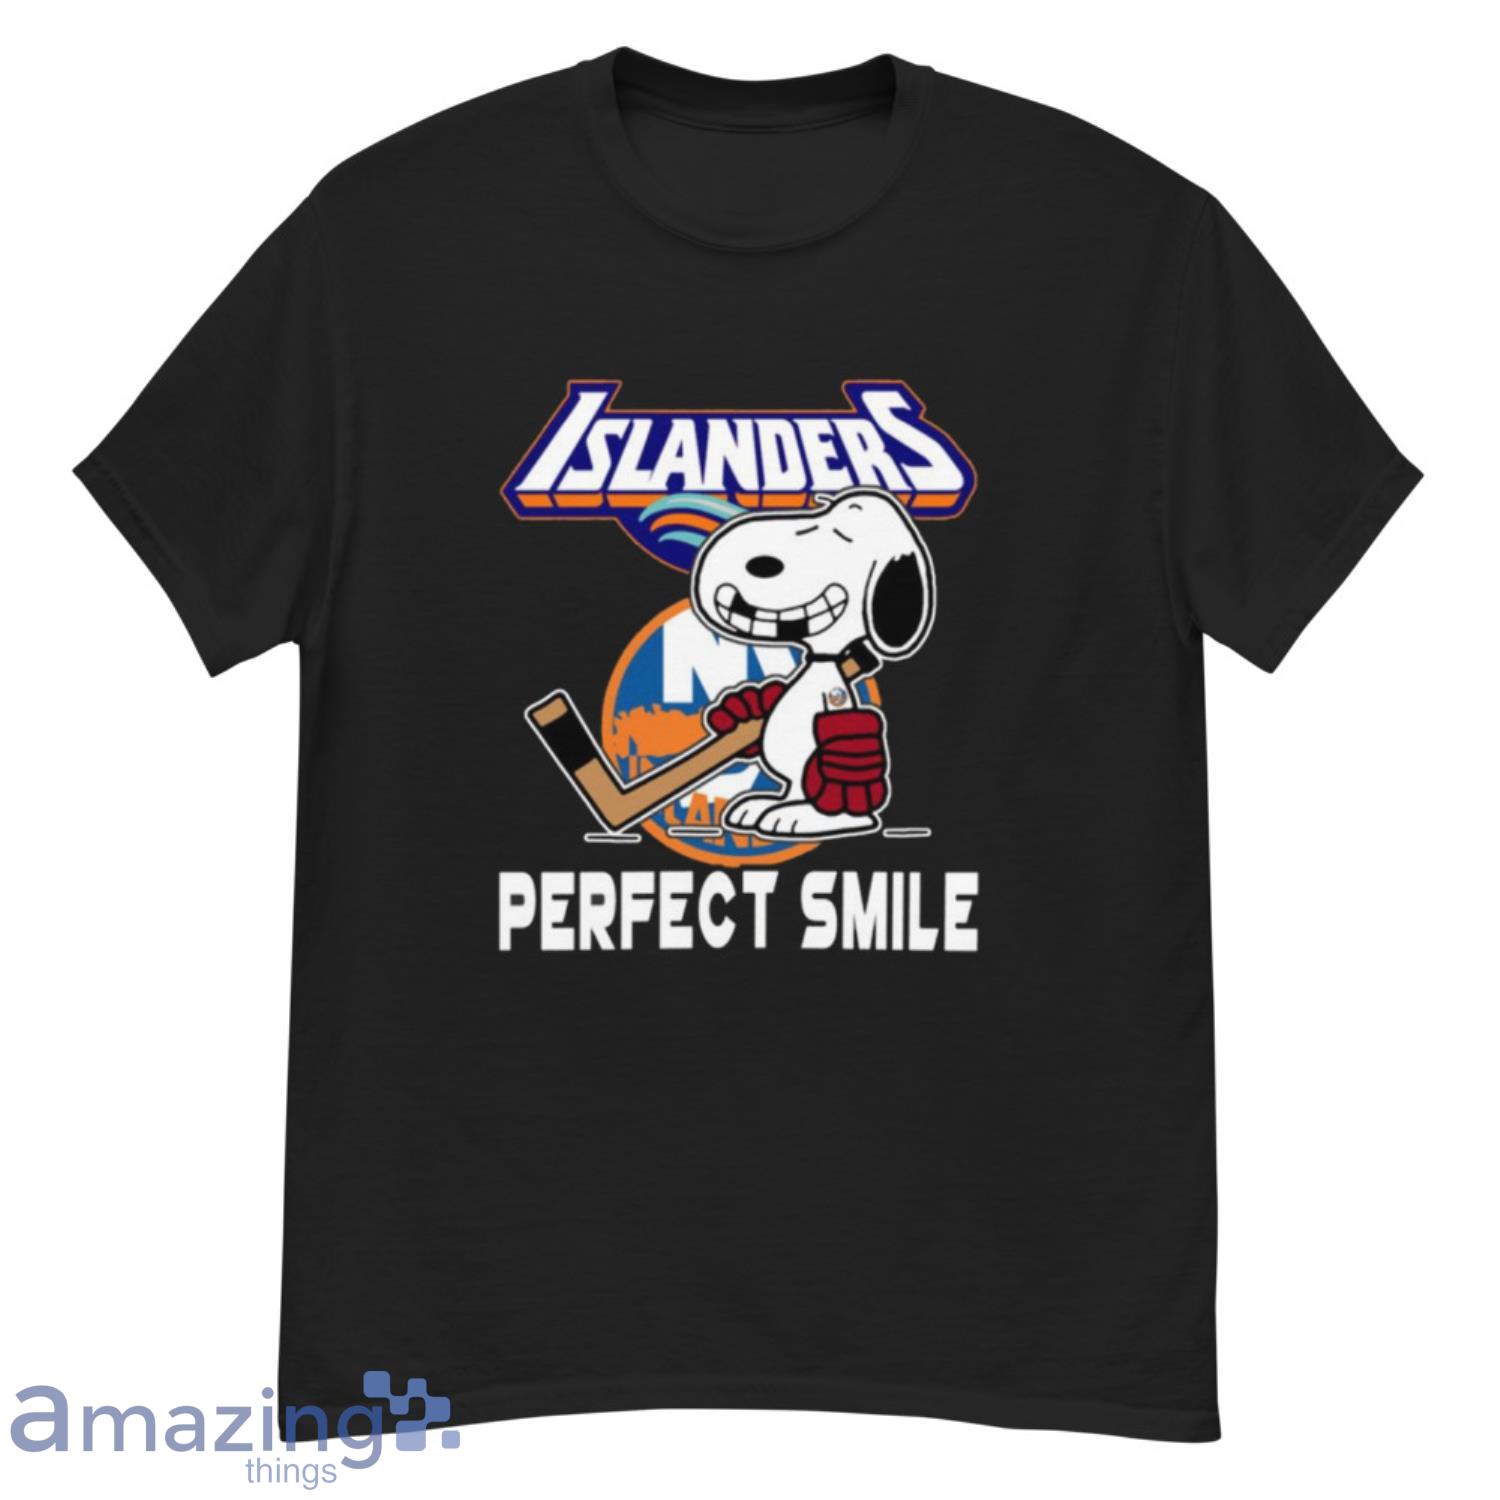 NHL New York Islanders Snoopy Perfect Smile The Peanuts Movie